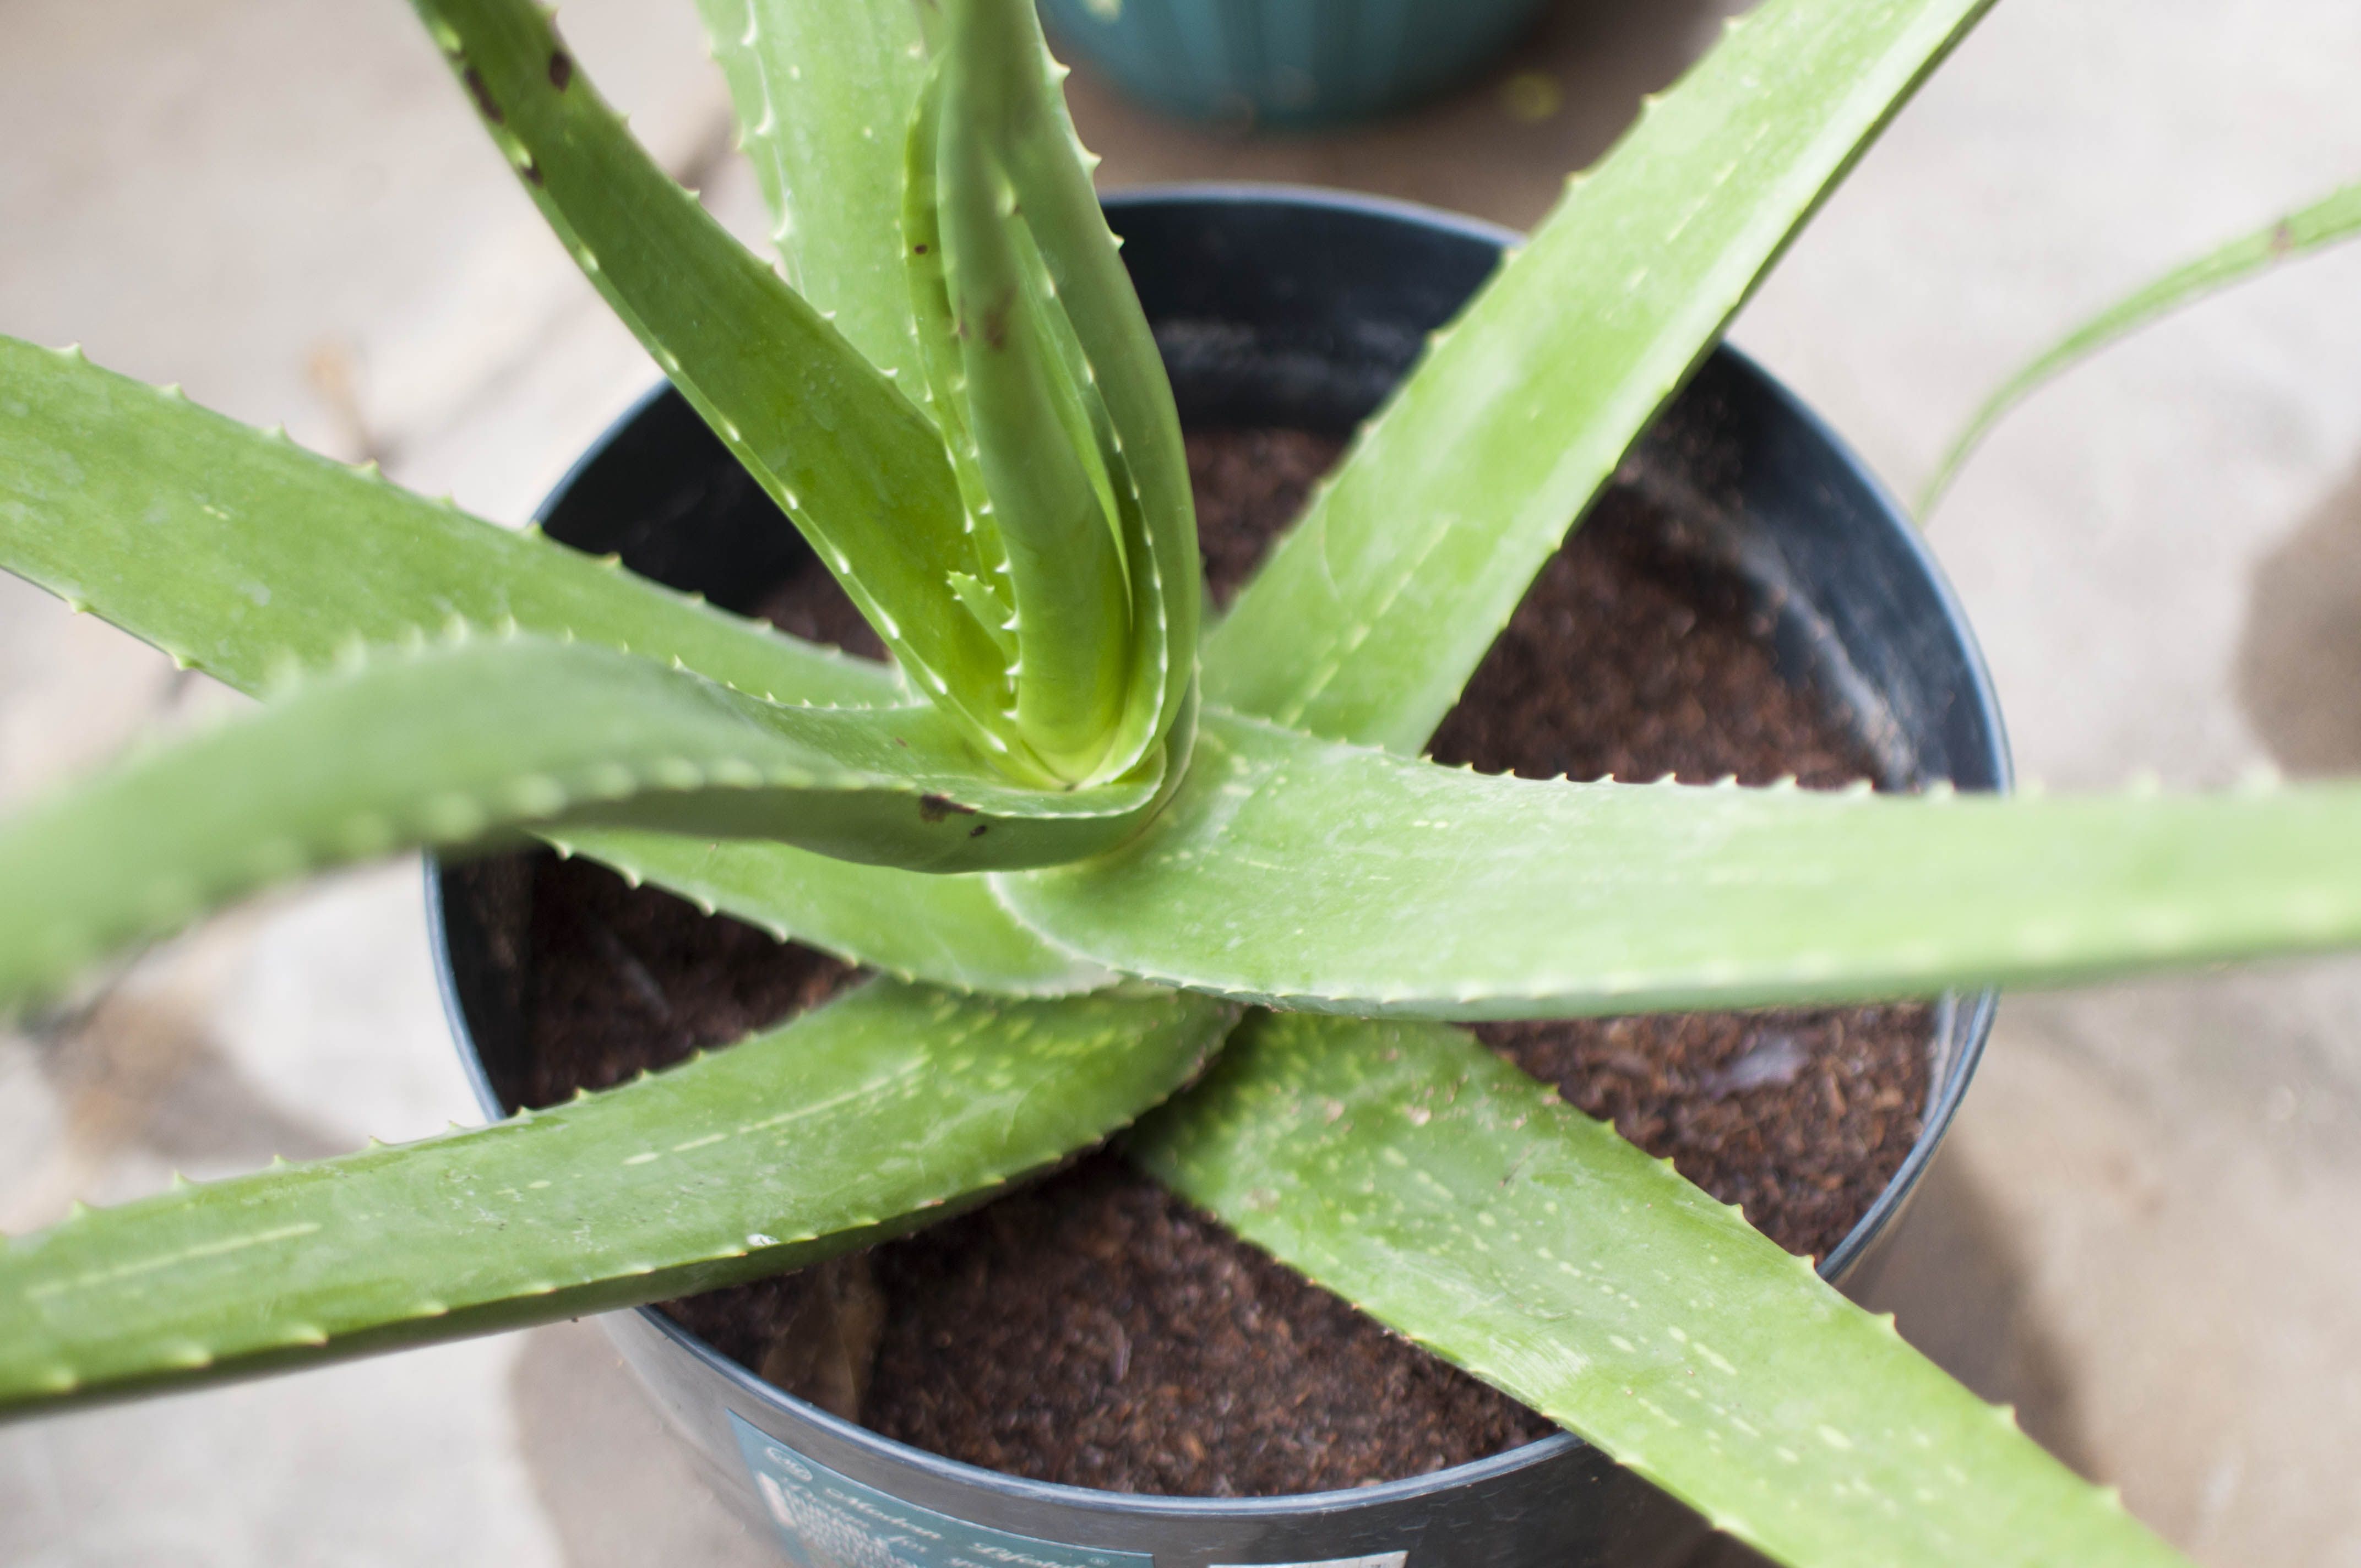 donker Inferieur min How to Grow Aloe Plants - What Kind of Soil Do Aloe Plants Need?